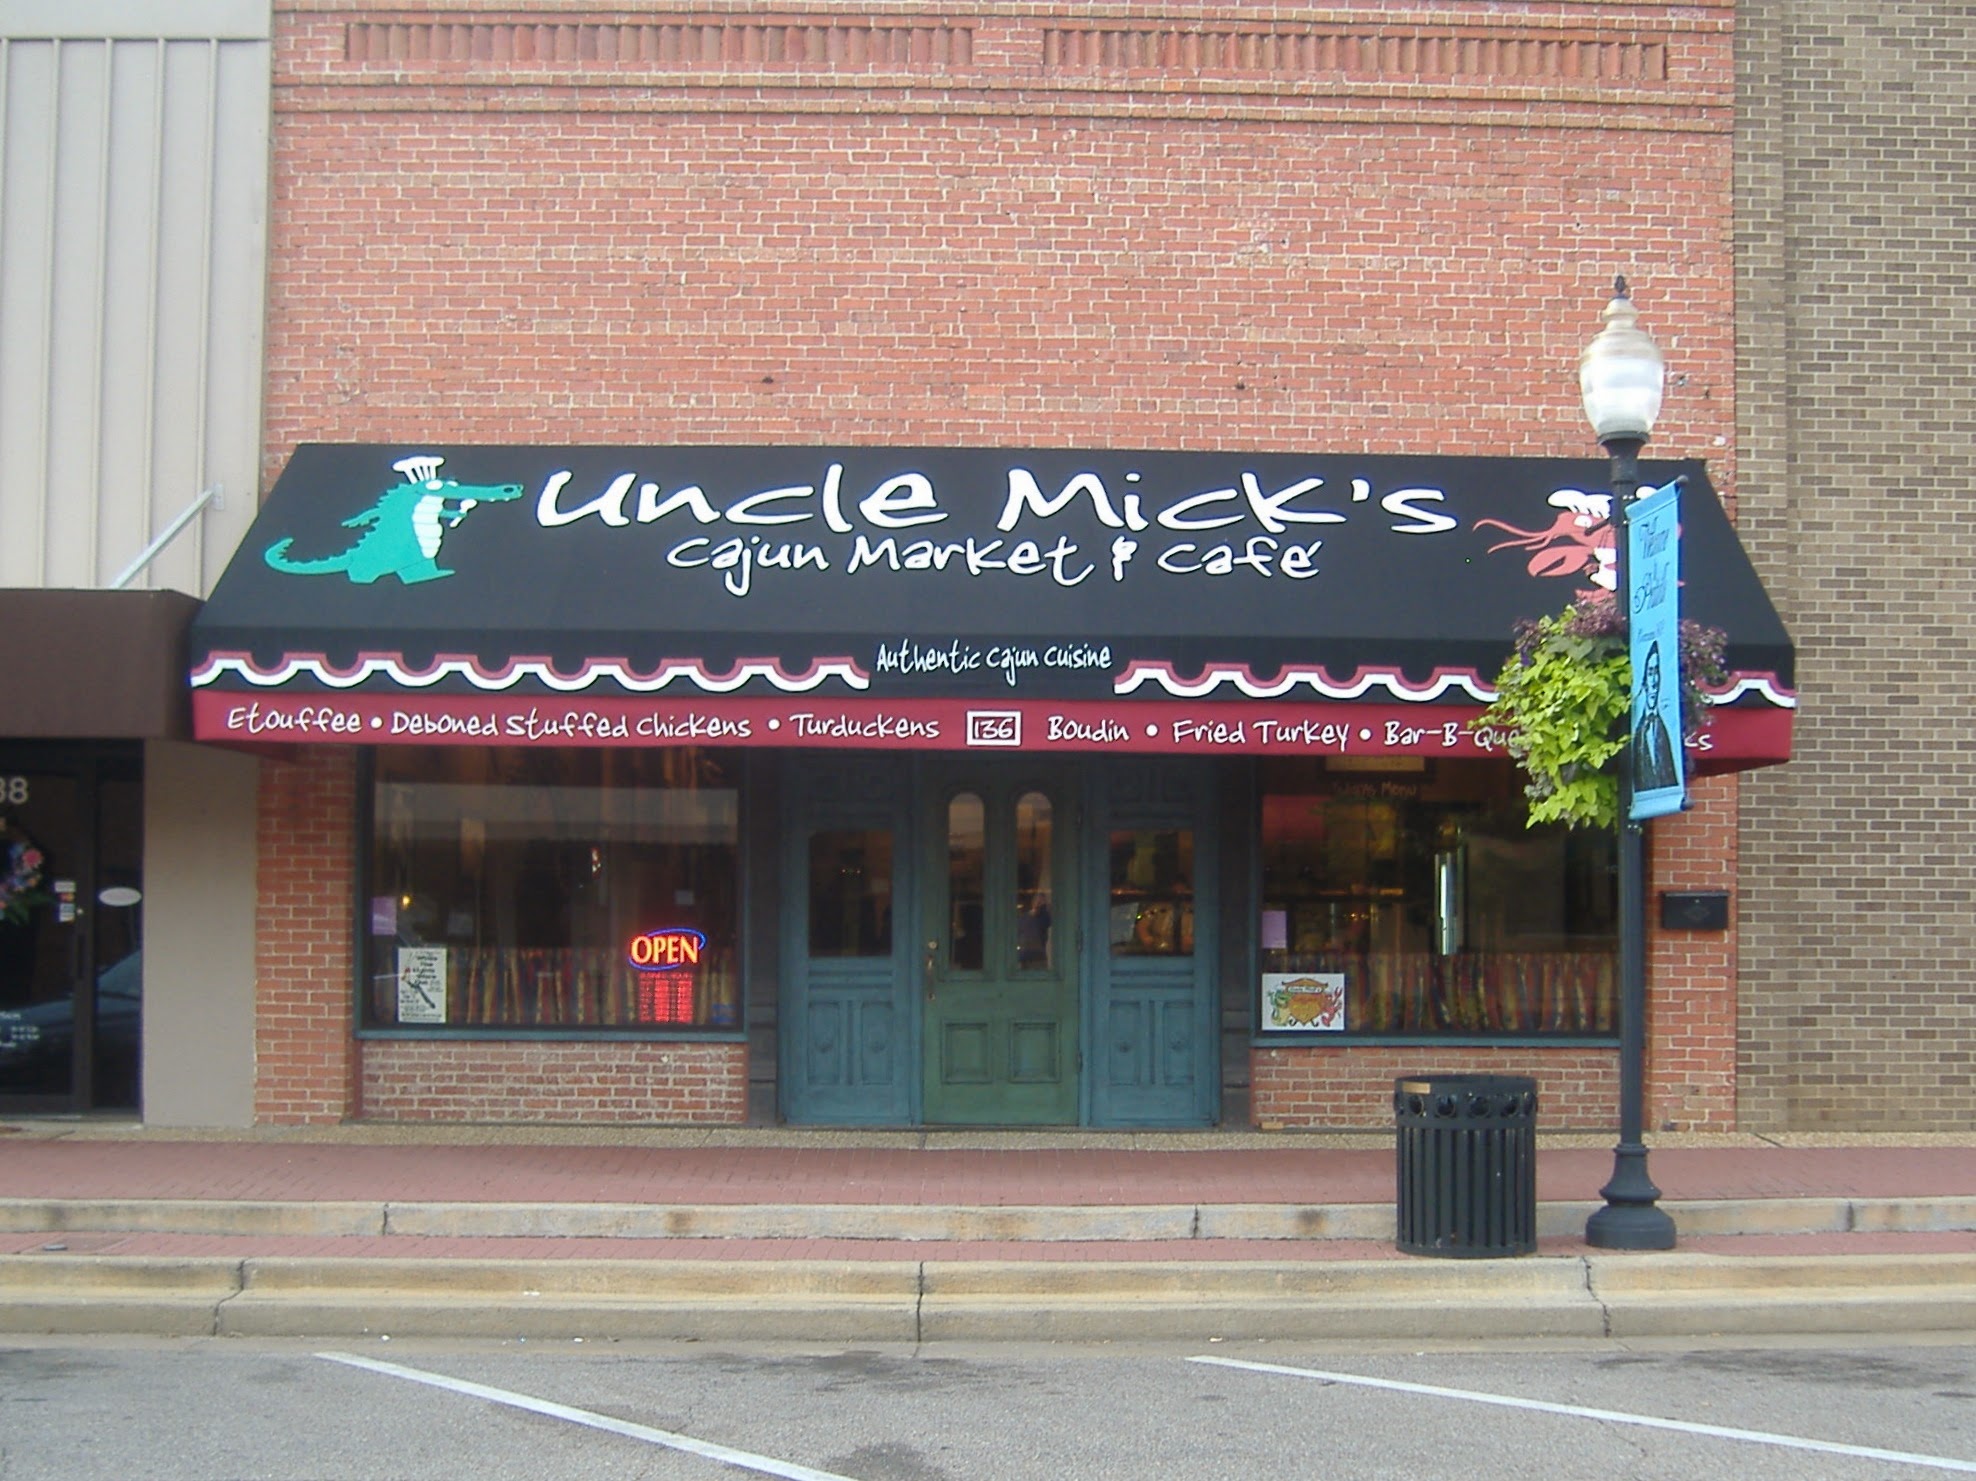 Uncle Mick's Cajun Market & Cafe